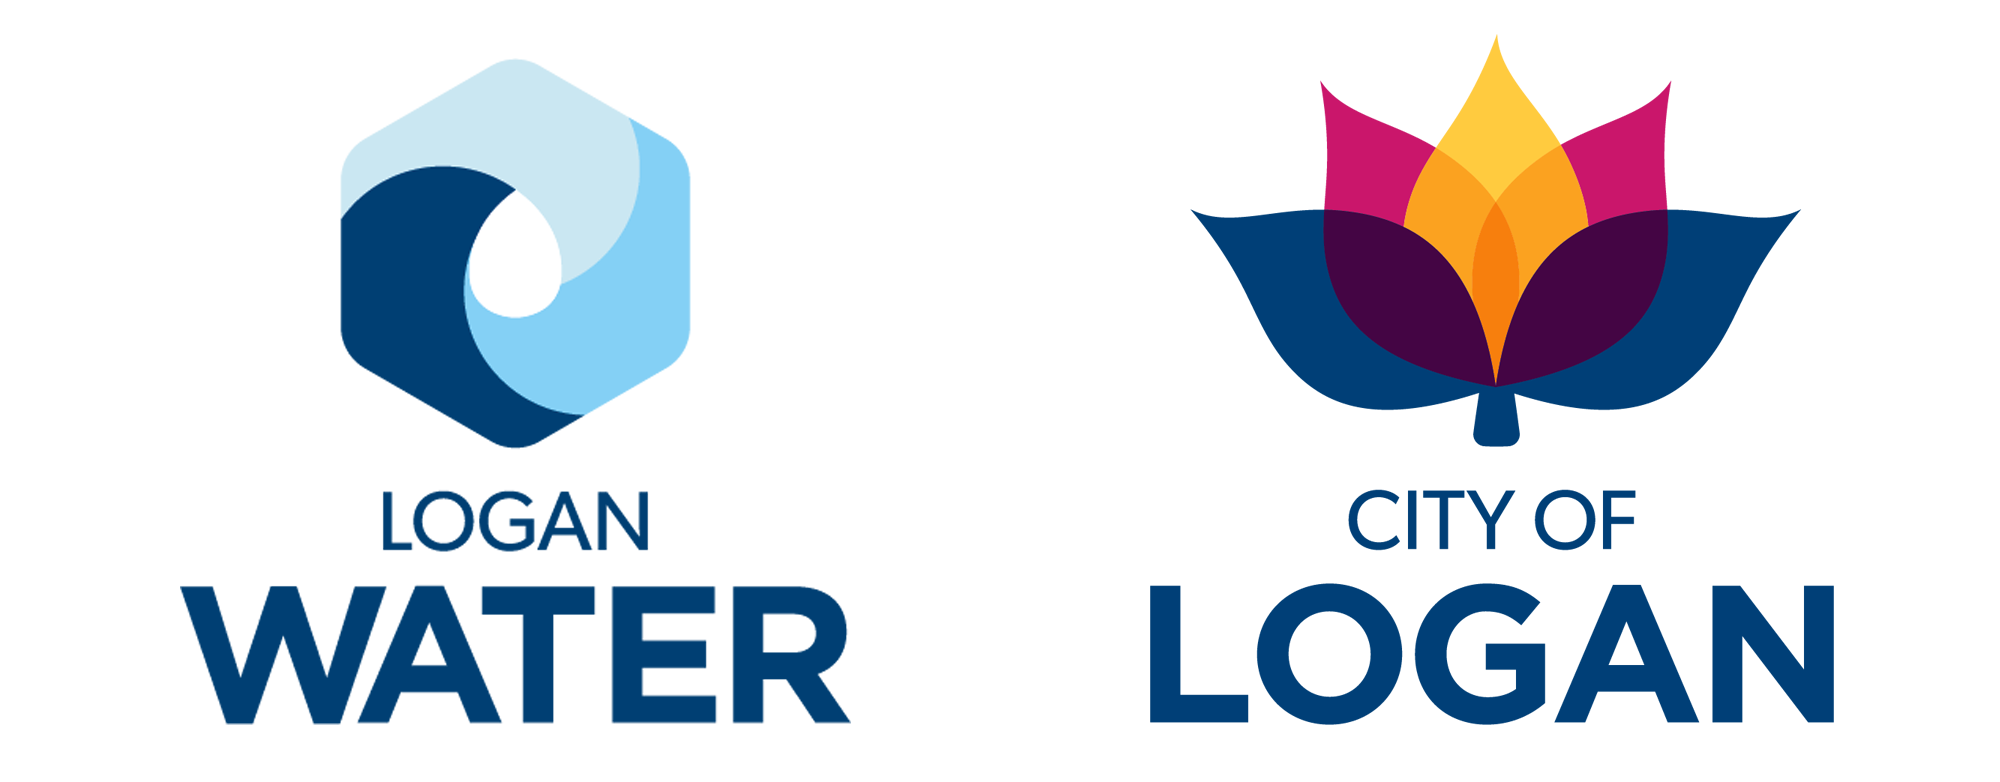 Logan Water and City of Logan logos